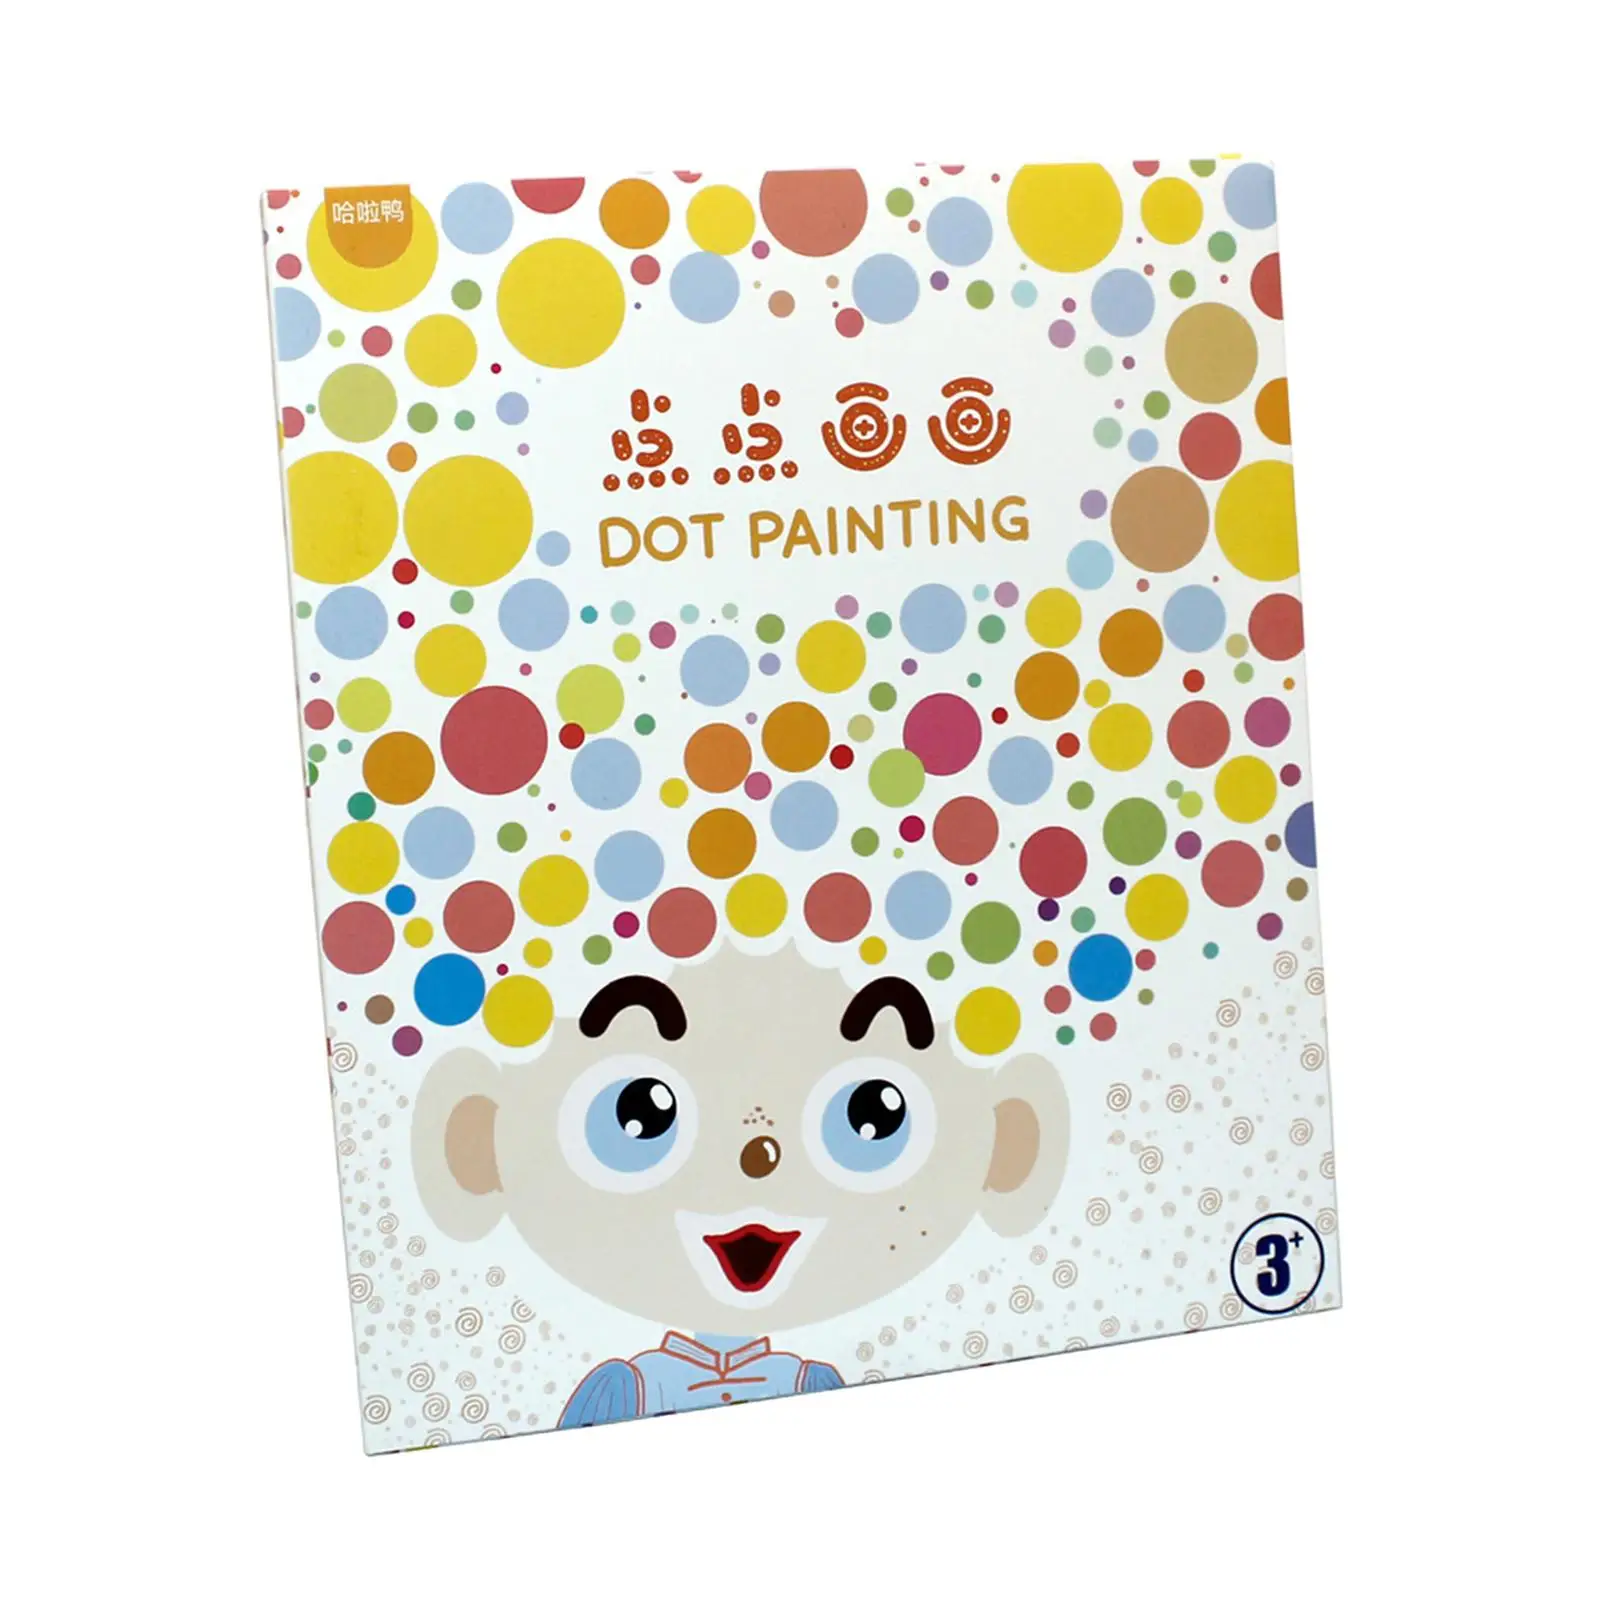 30x Dot Coloring Papers Book Birthday Gift DIY Daot Painting Papers for Age 3+ Kids Boys Girls Preschool Kindergarten Activities